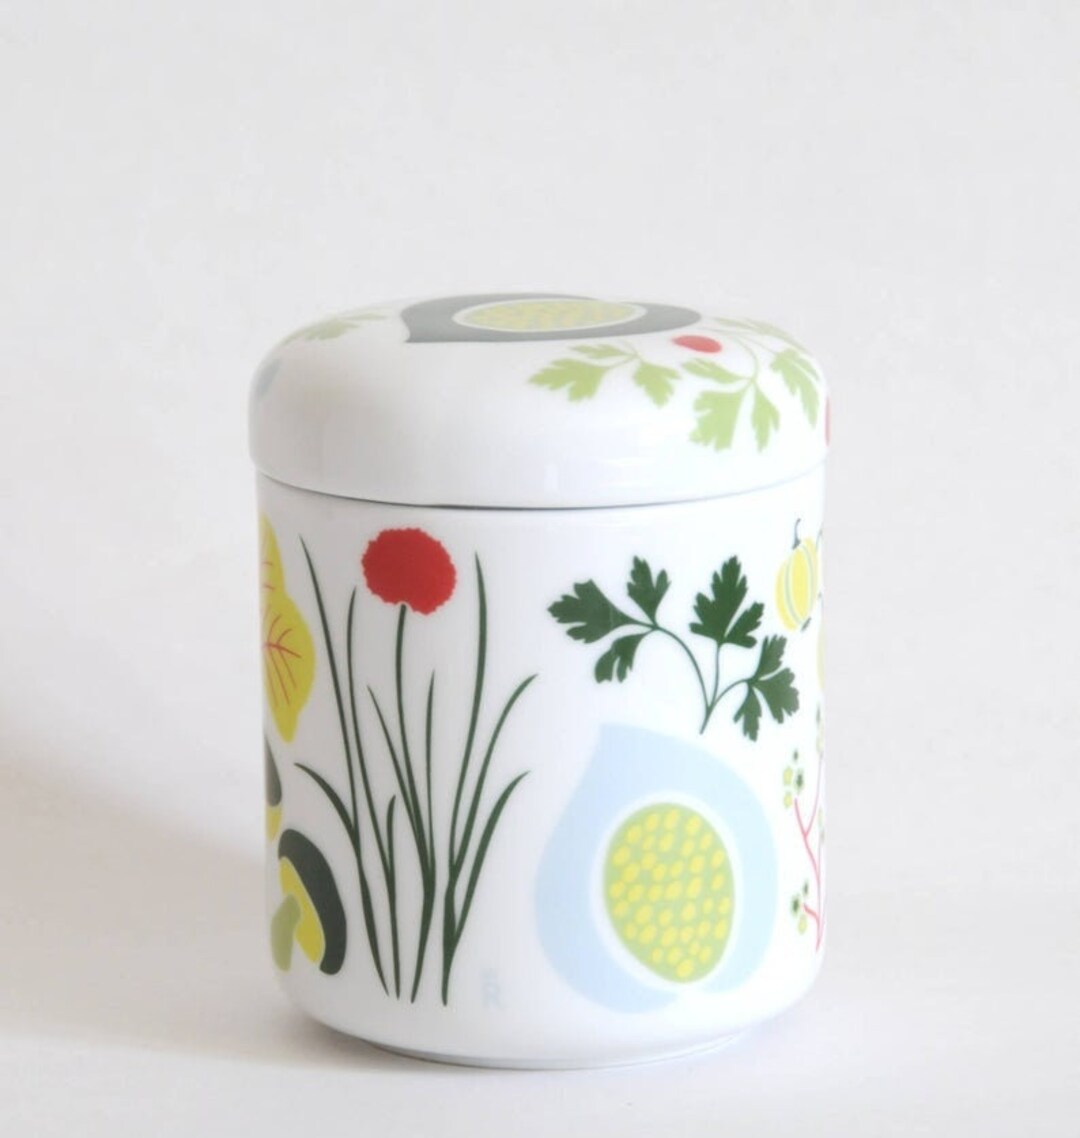 Rorstrand Kulinara Jar With Lid Design by Hanna Werning. - Etsy